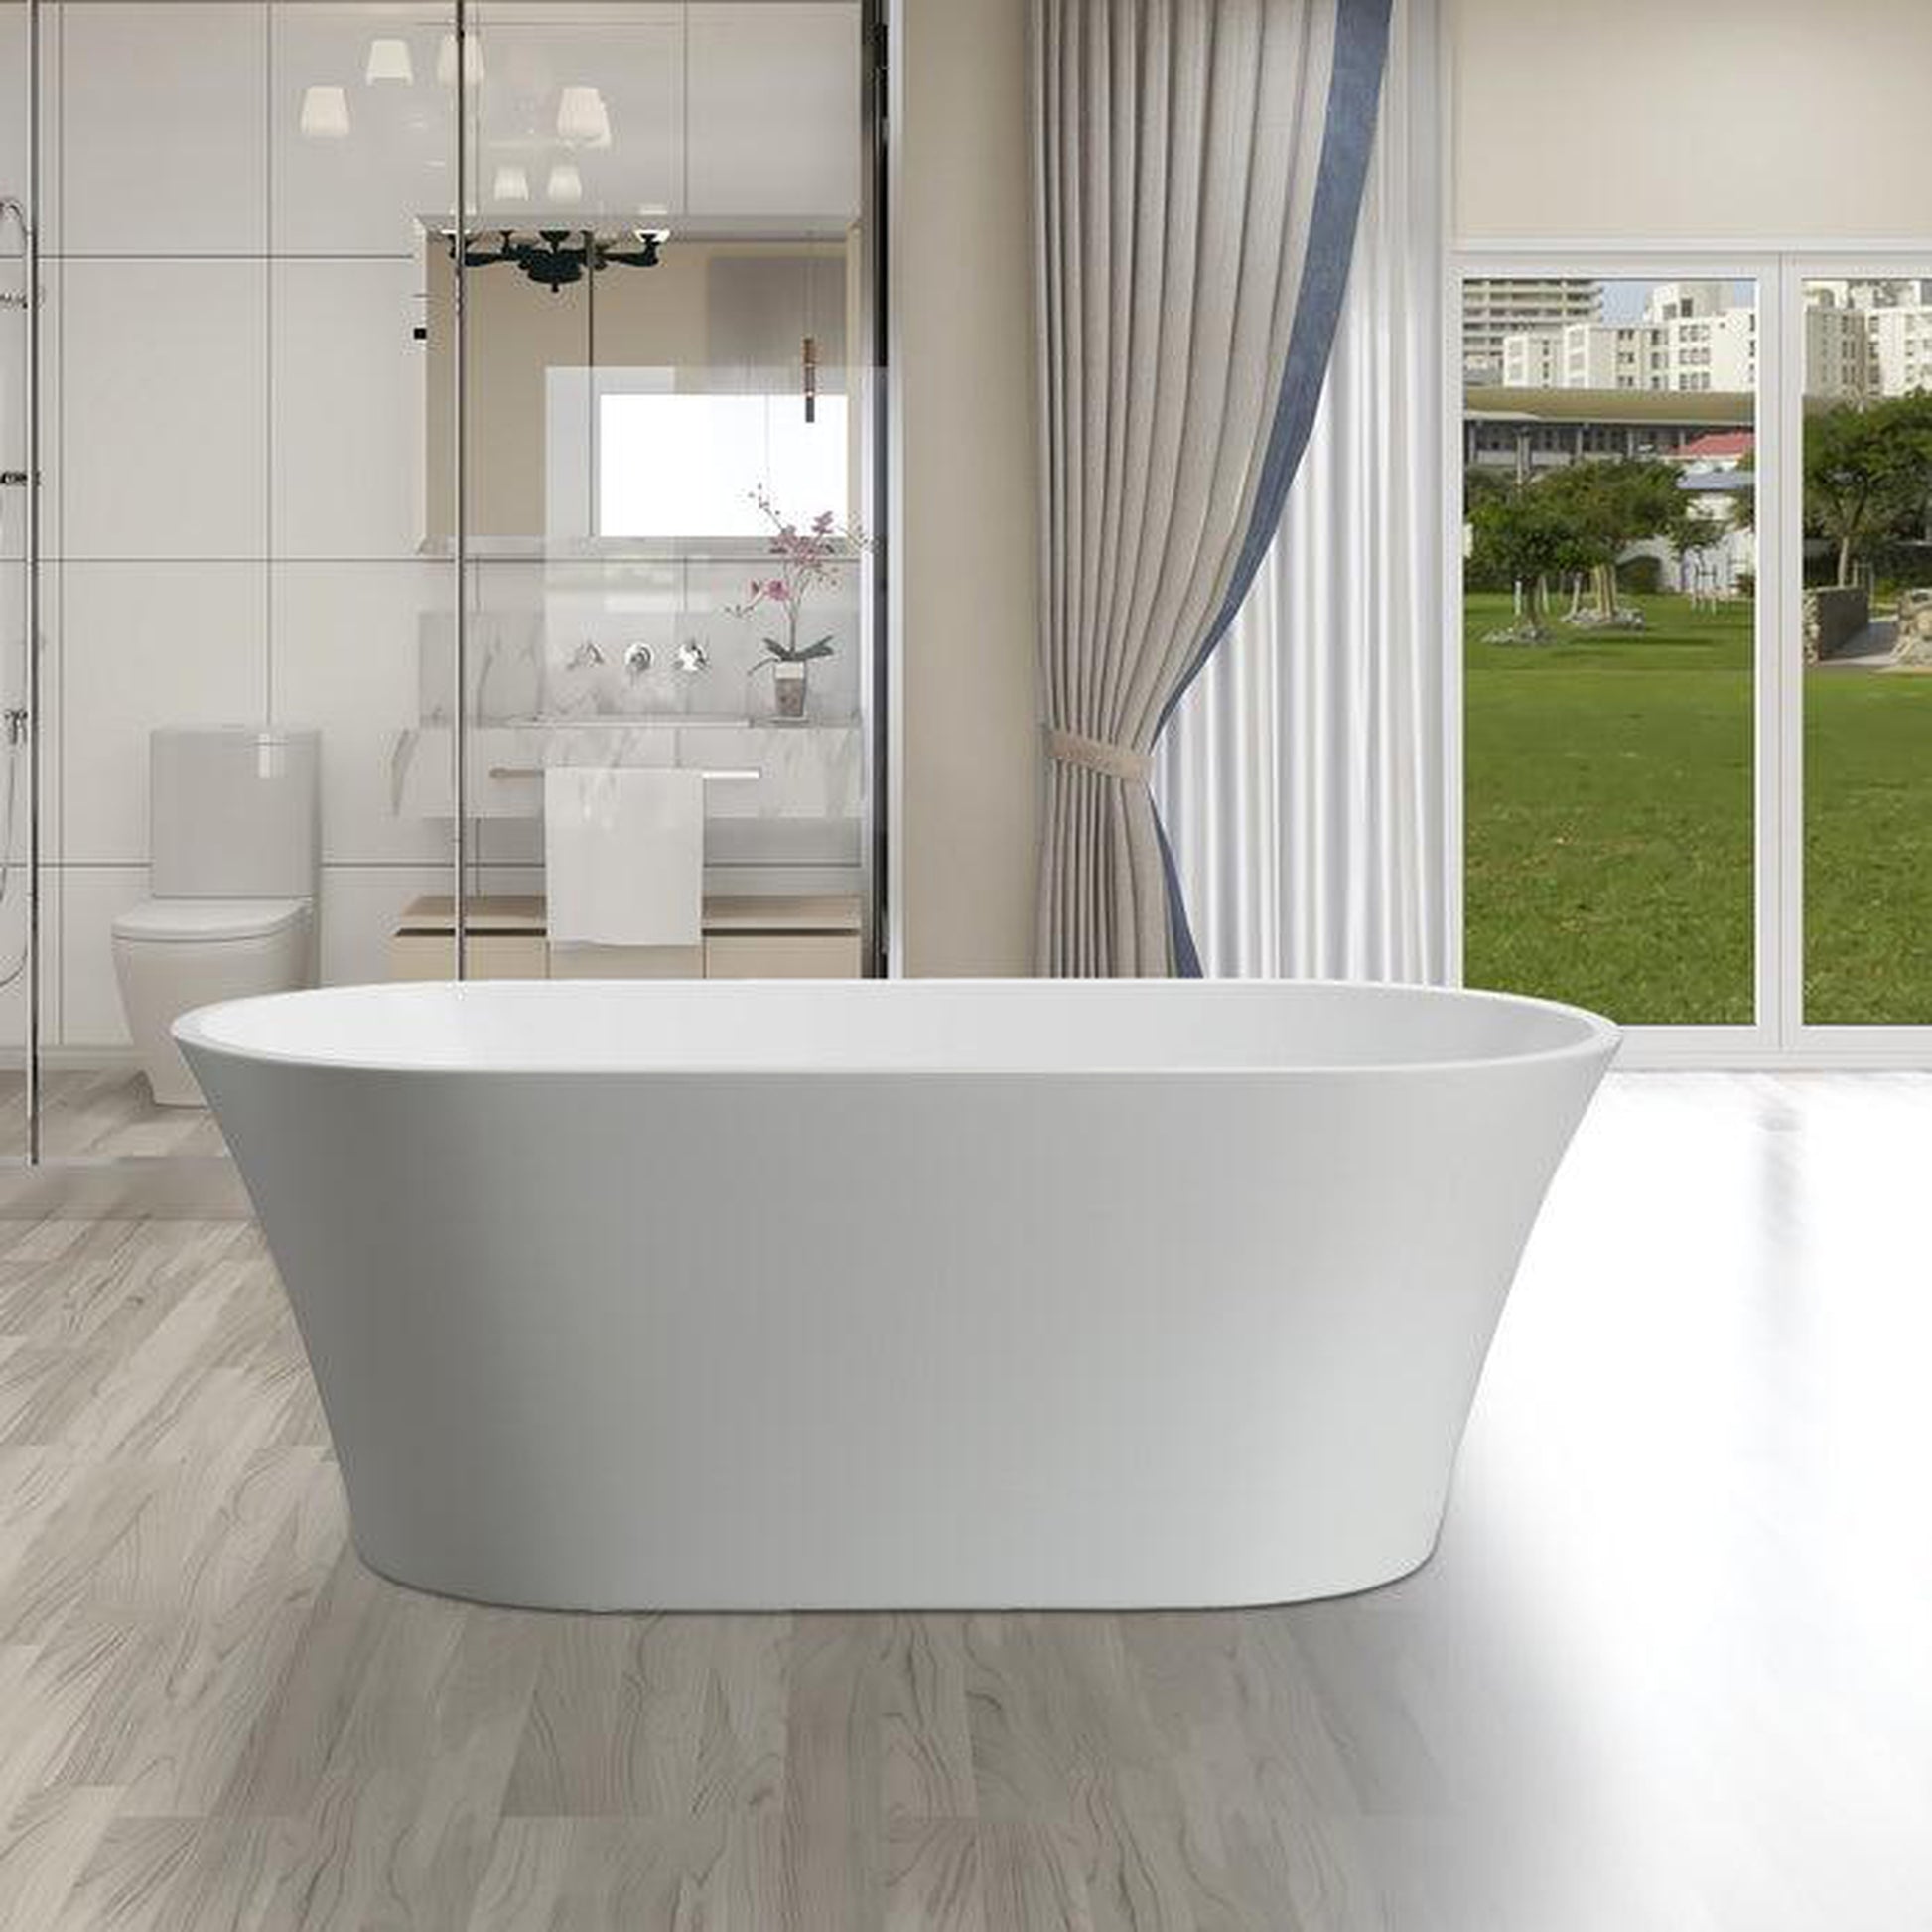 Vanity Art 63" x 30" White Acrylic Freestanding Bathtub With Chrome Pop-up Drain, Overflow and Flexible Drain Hose